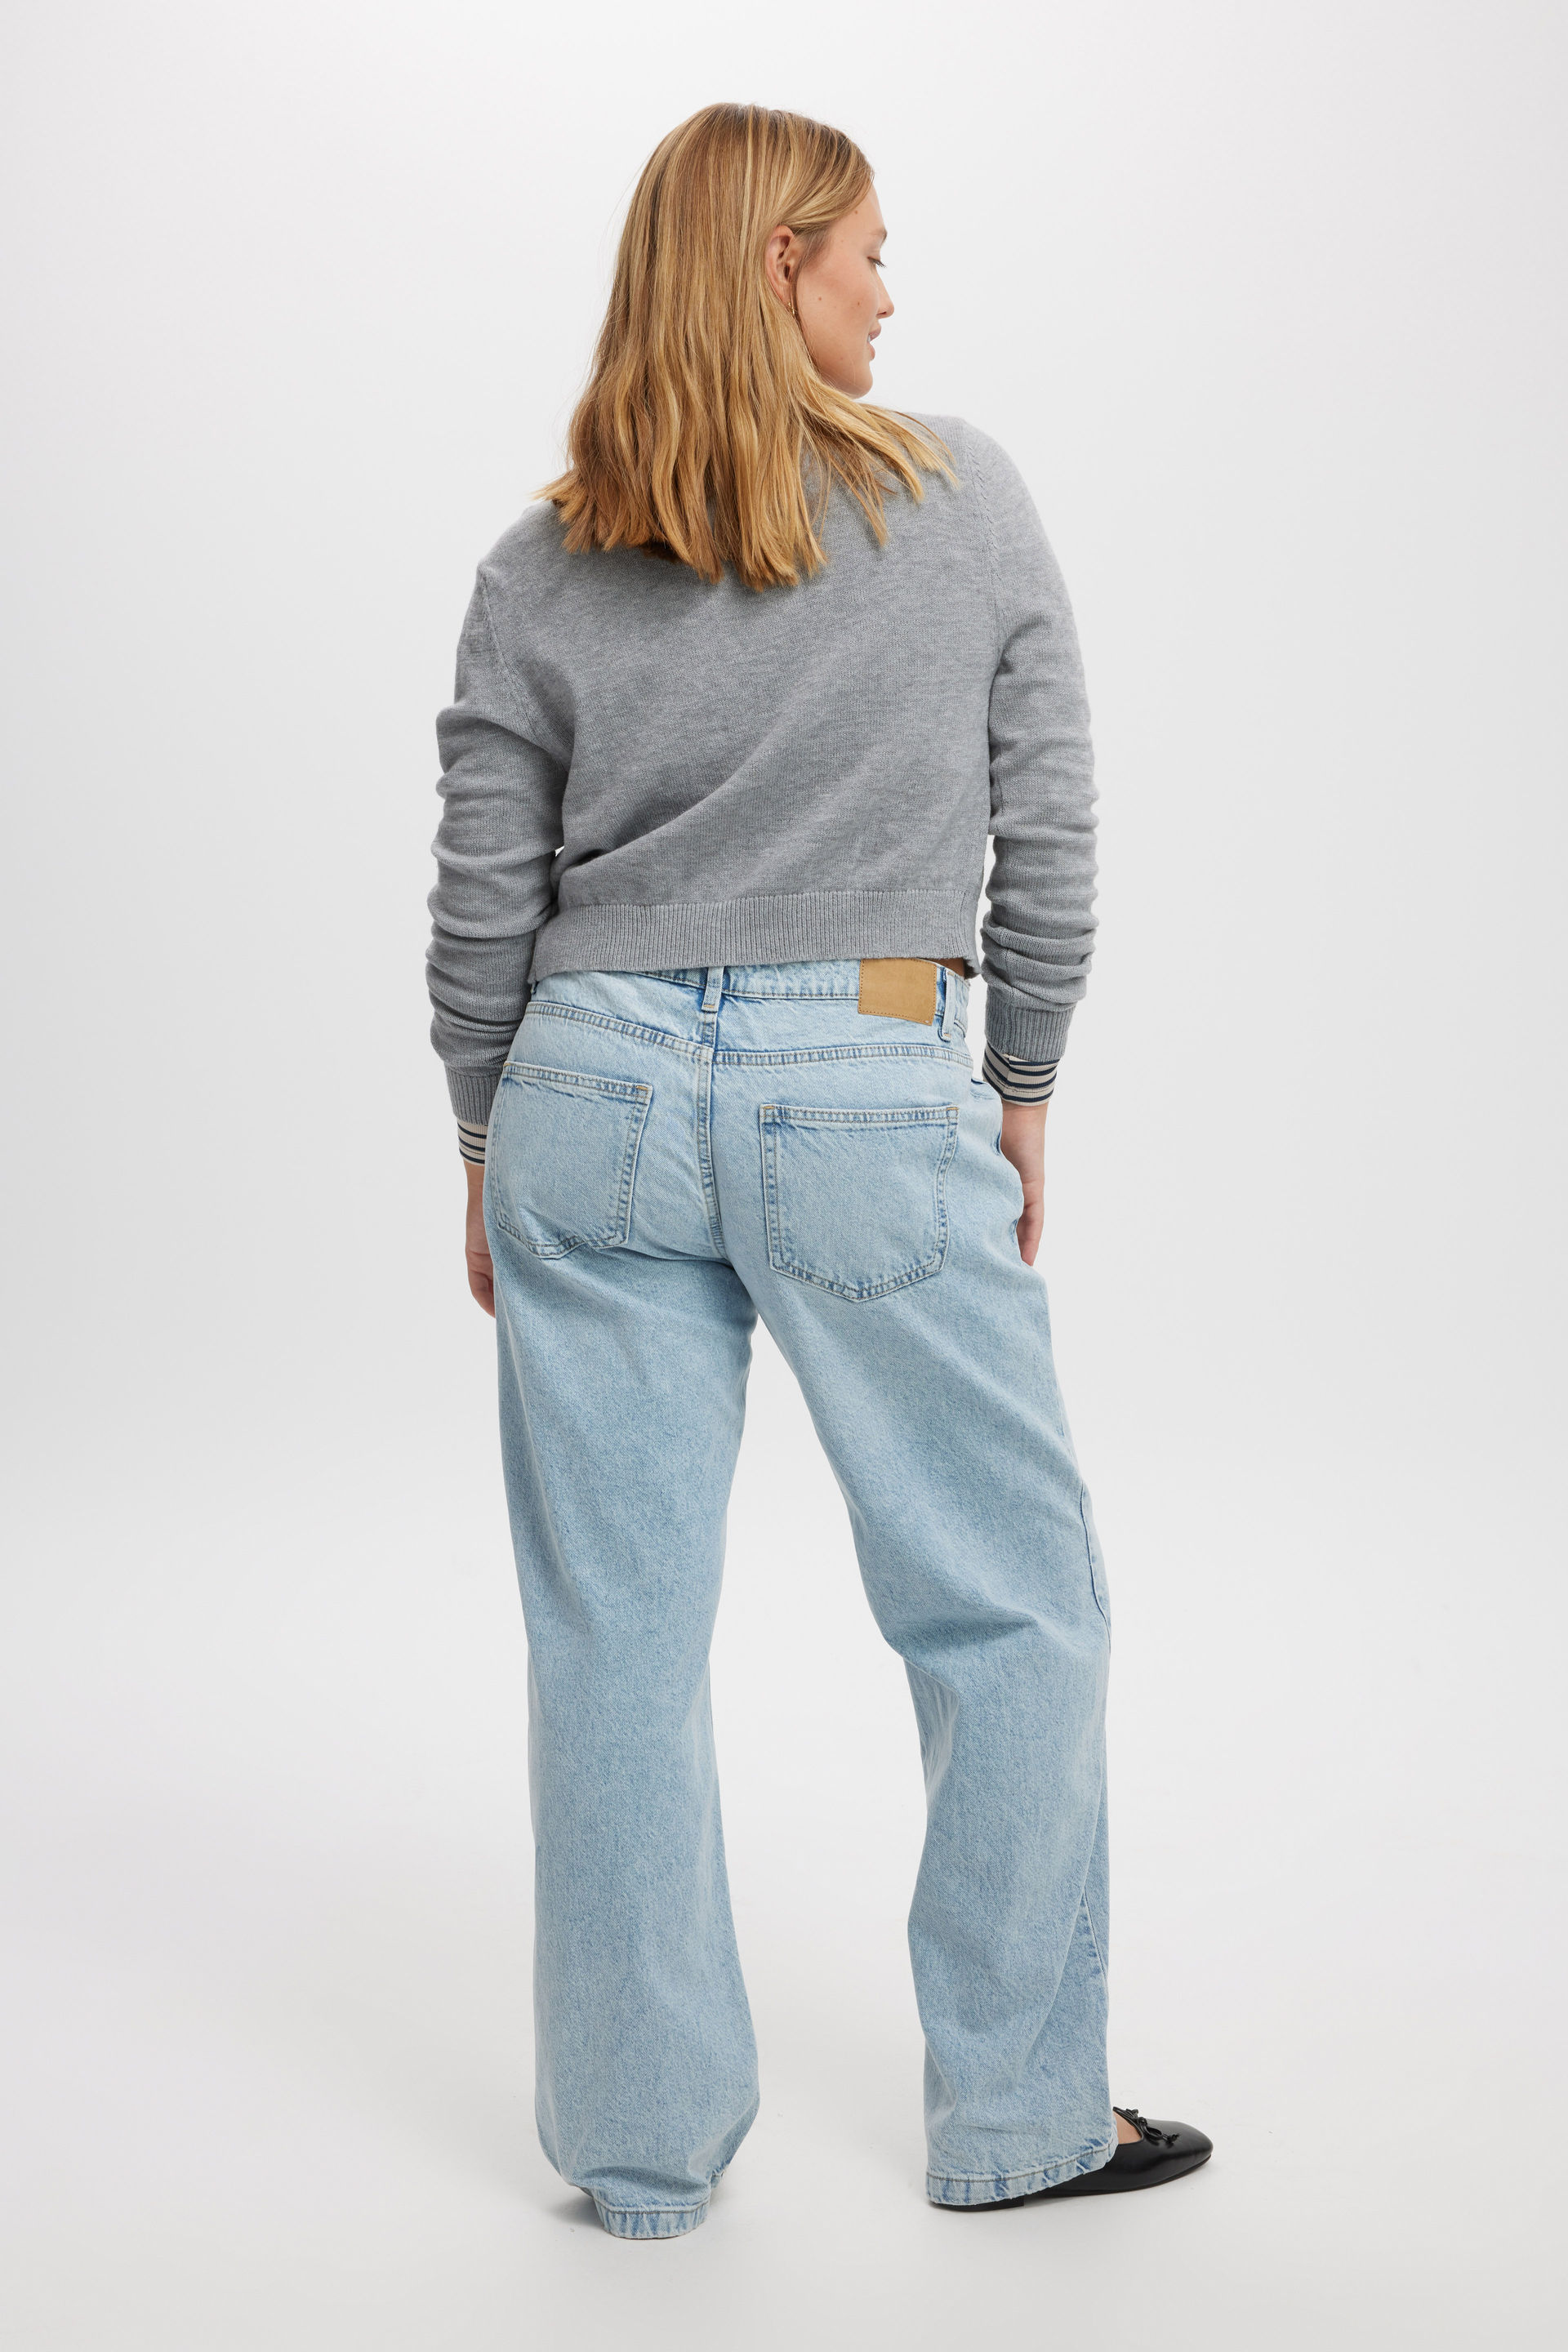 Winona 90's Wide Leg Jeans - Medium Blue Wash